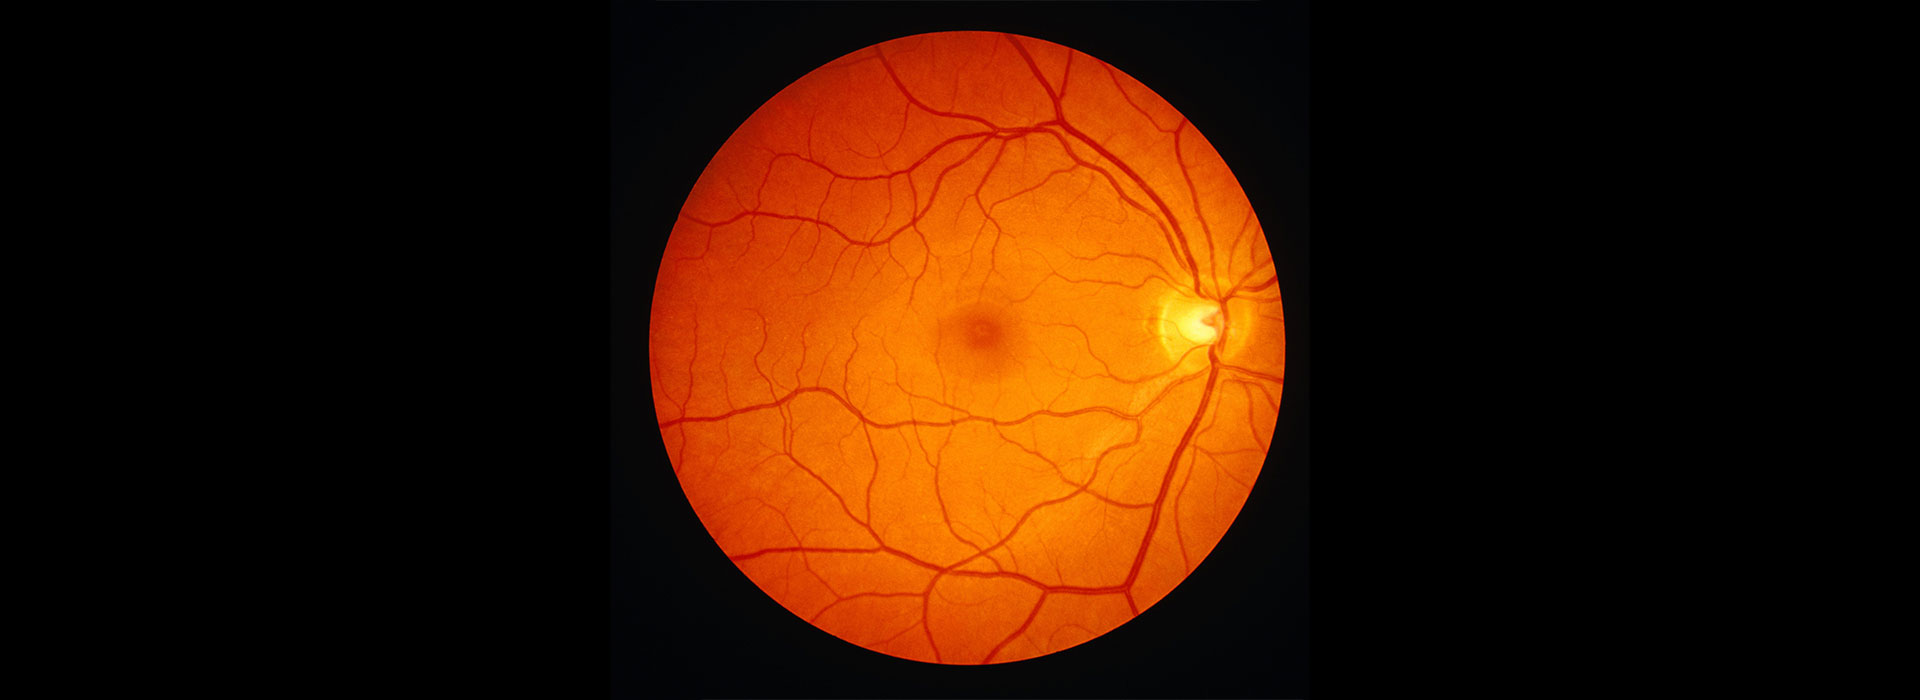 retinal-image